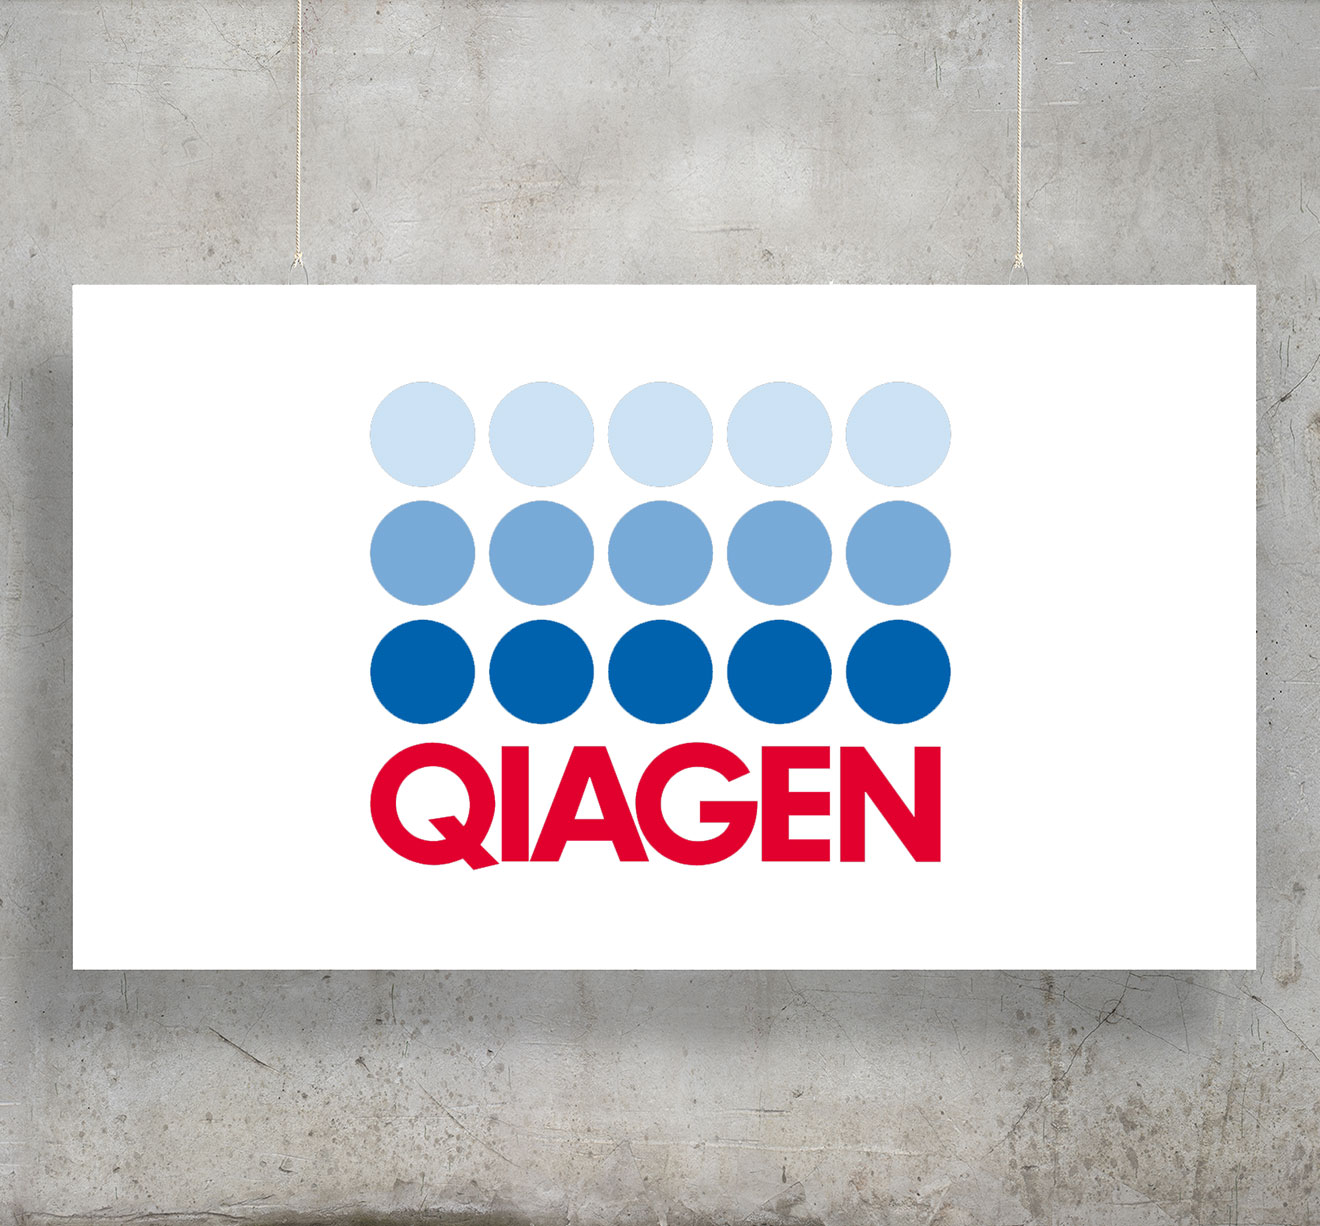 Qiagen logo